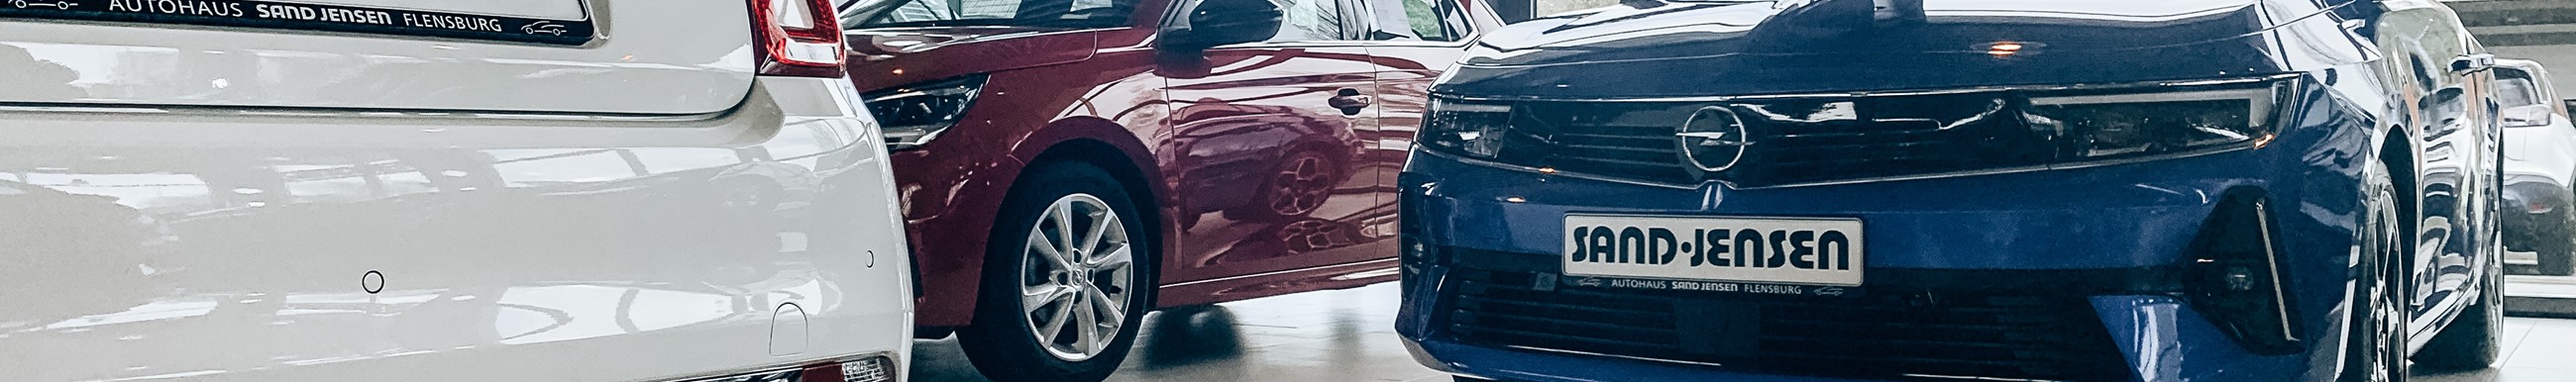 blaues Opel Fahrzeug im Autohaus Sandjensen